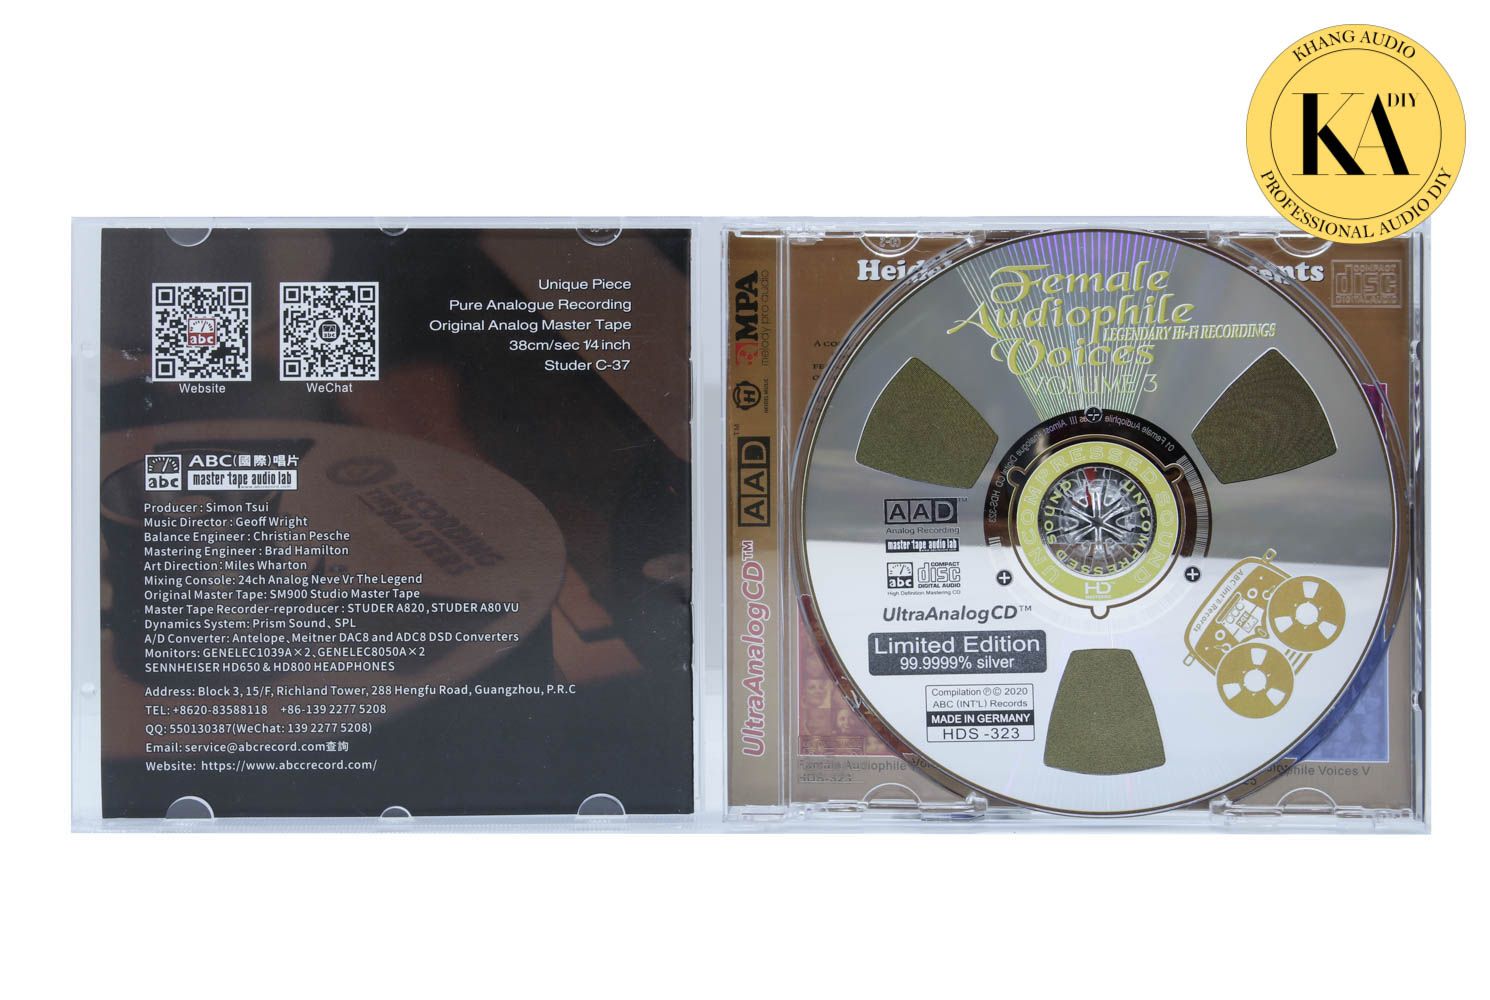 CD Female Audiophile Voices Vol.3